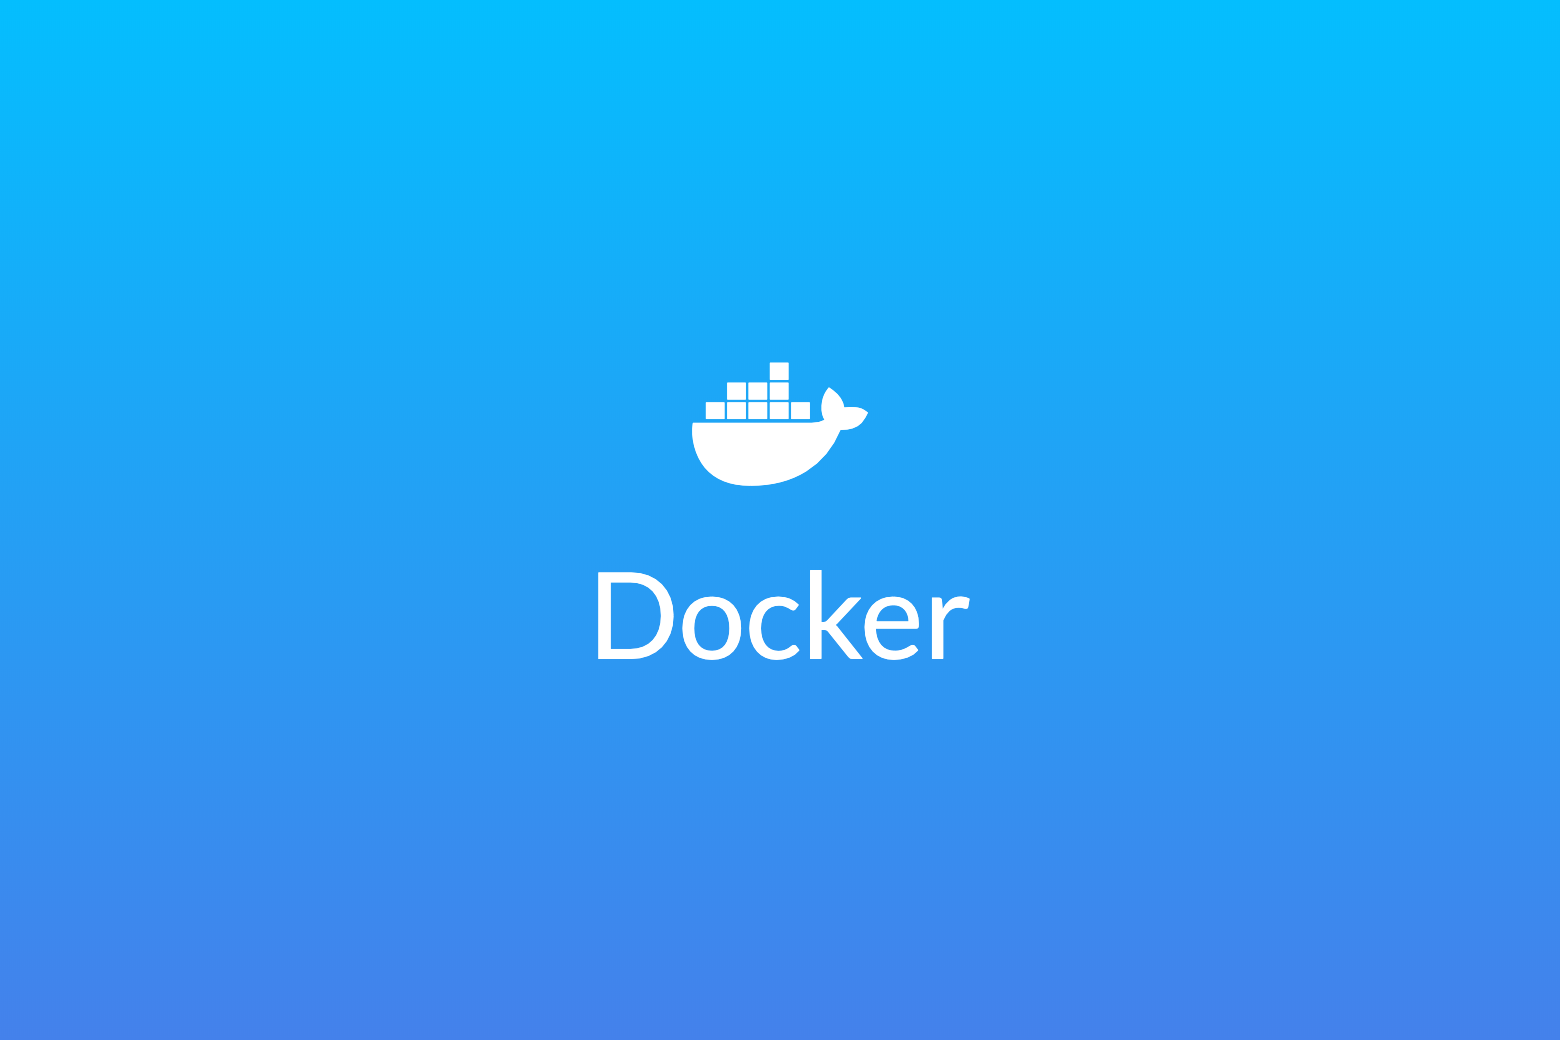 docker-for-mac/osxfs/#namespaces